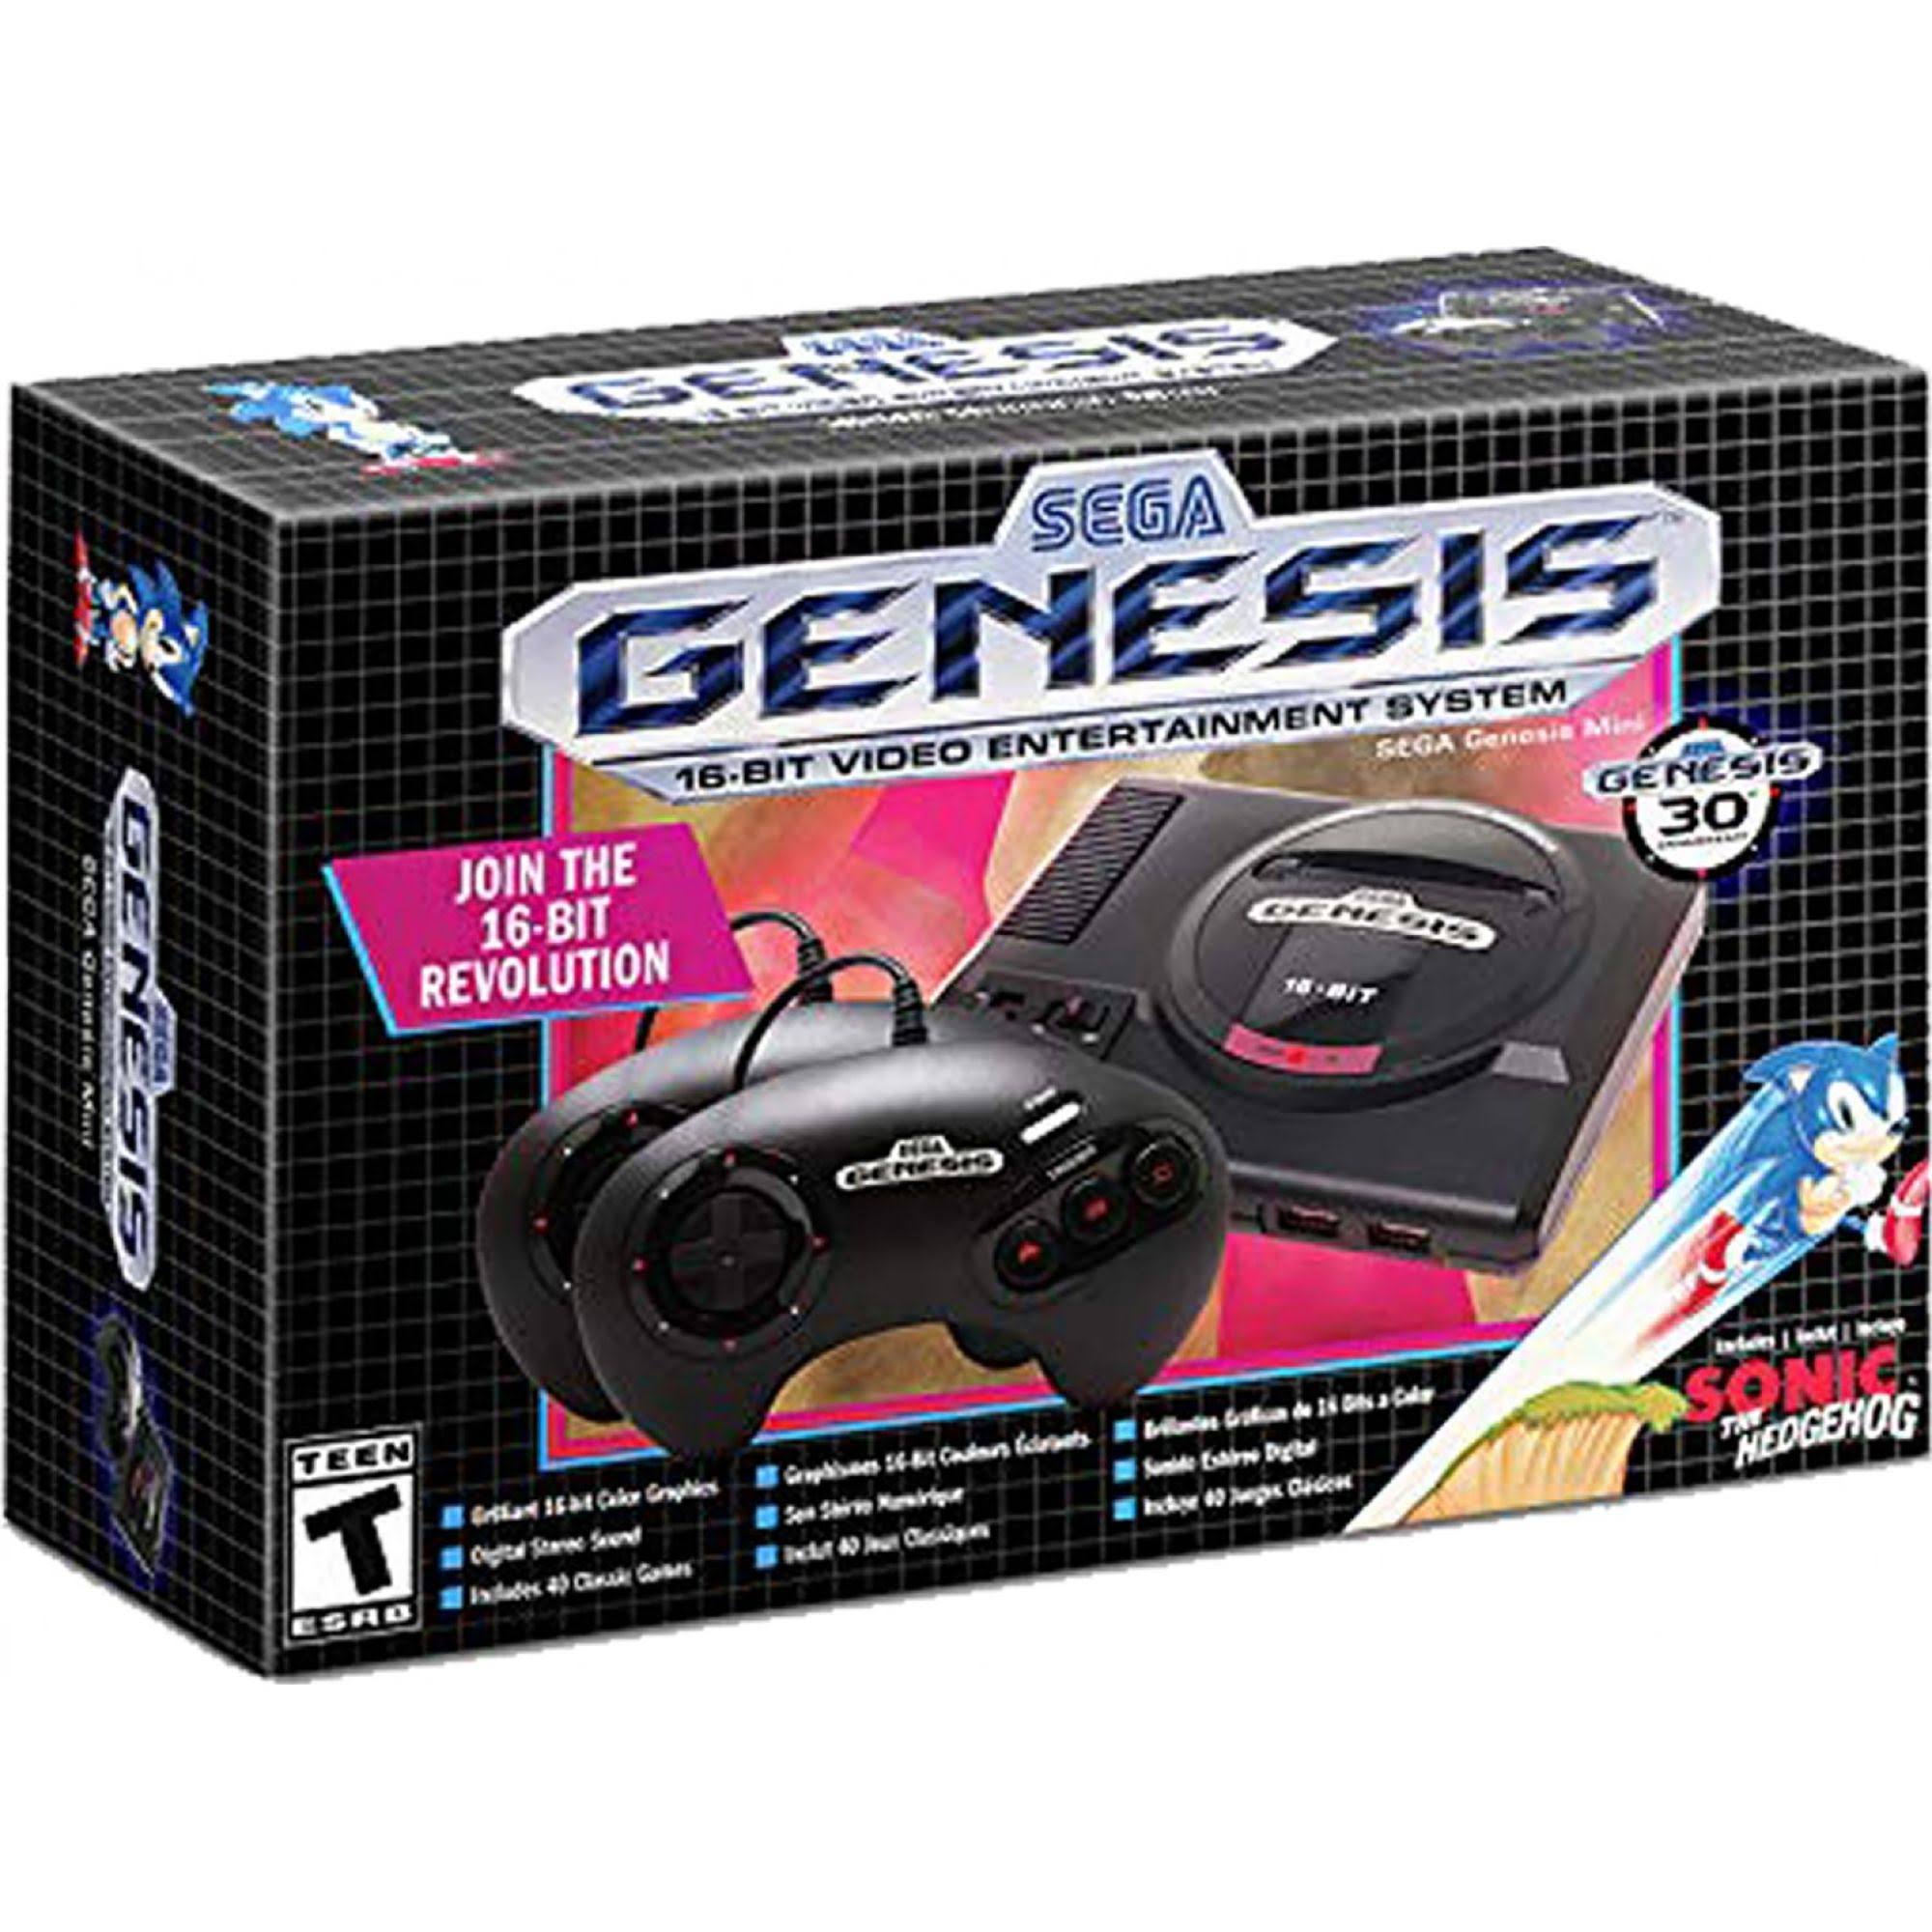 Sega Genesis Mini Console - Black